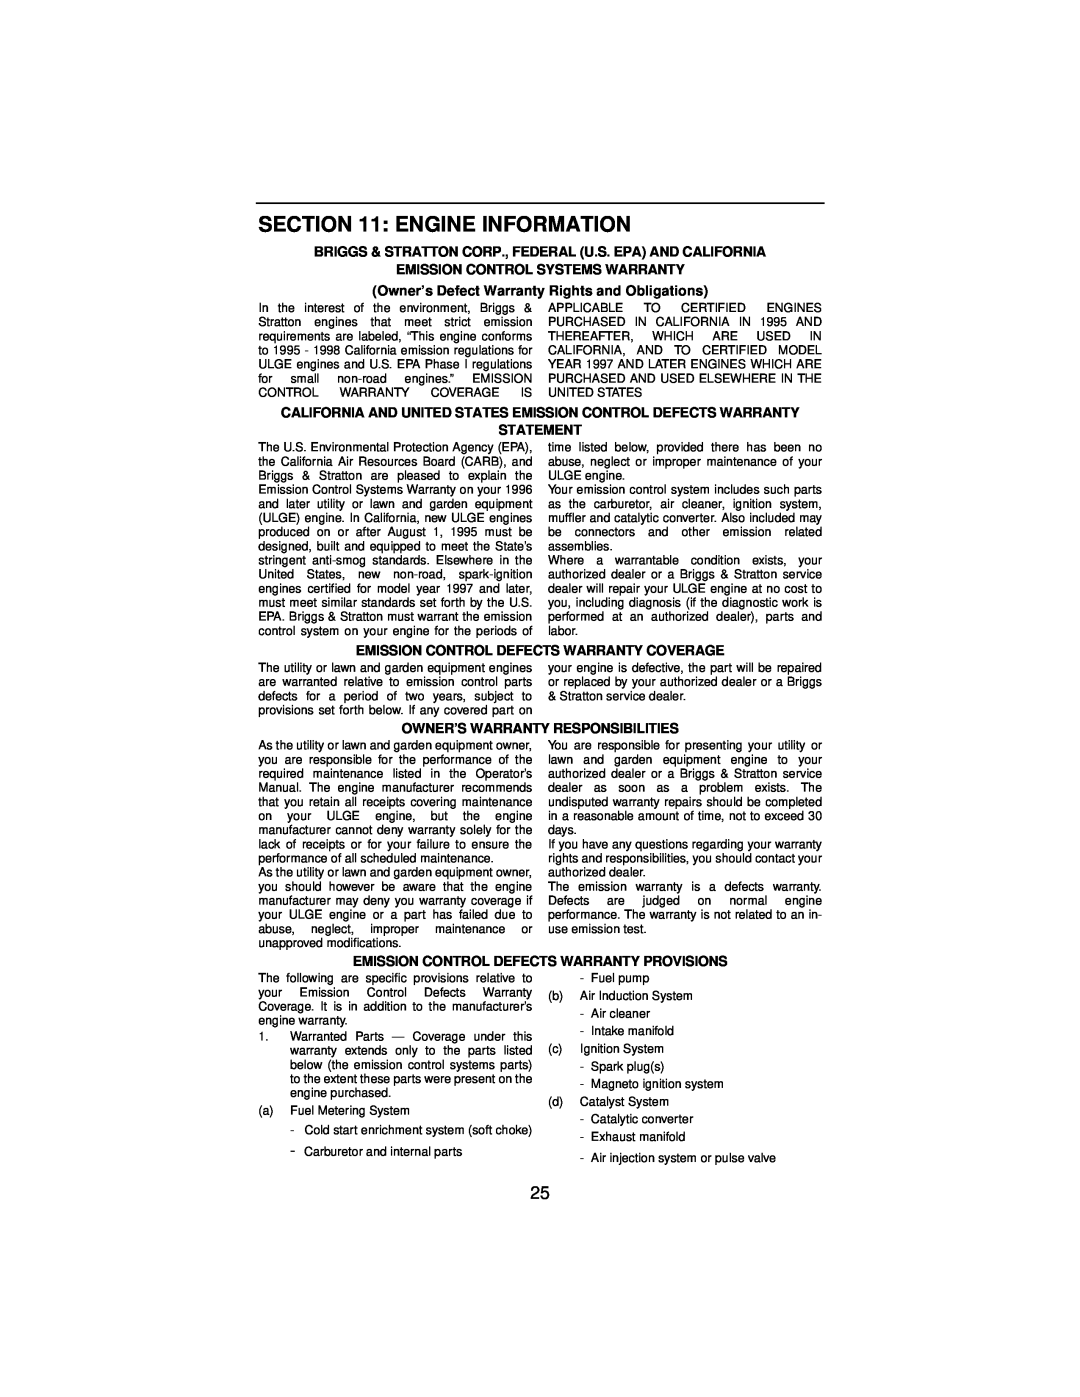 Cub Cadet 3185 manual Engine Information, Briggs & Stratton Corp., Federal U.S. Epa And California, Statement 